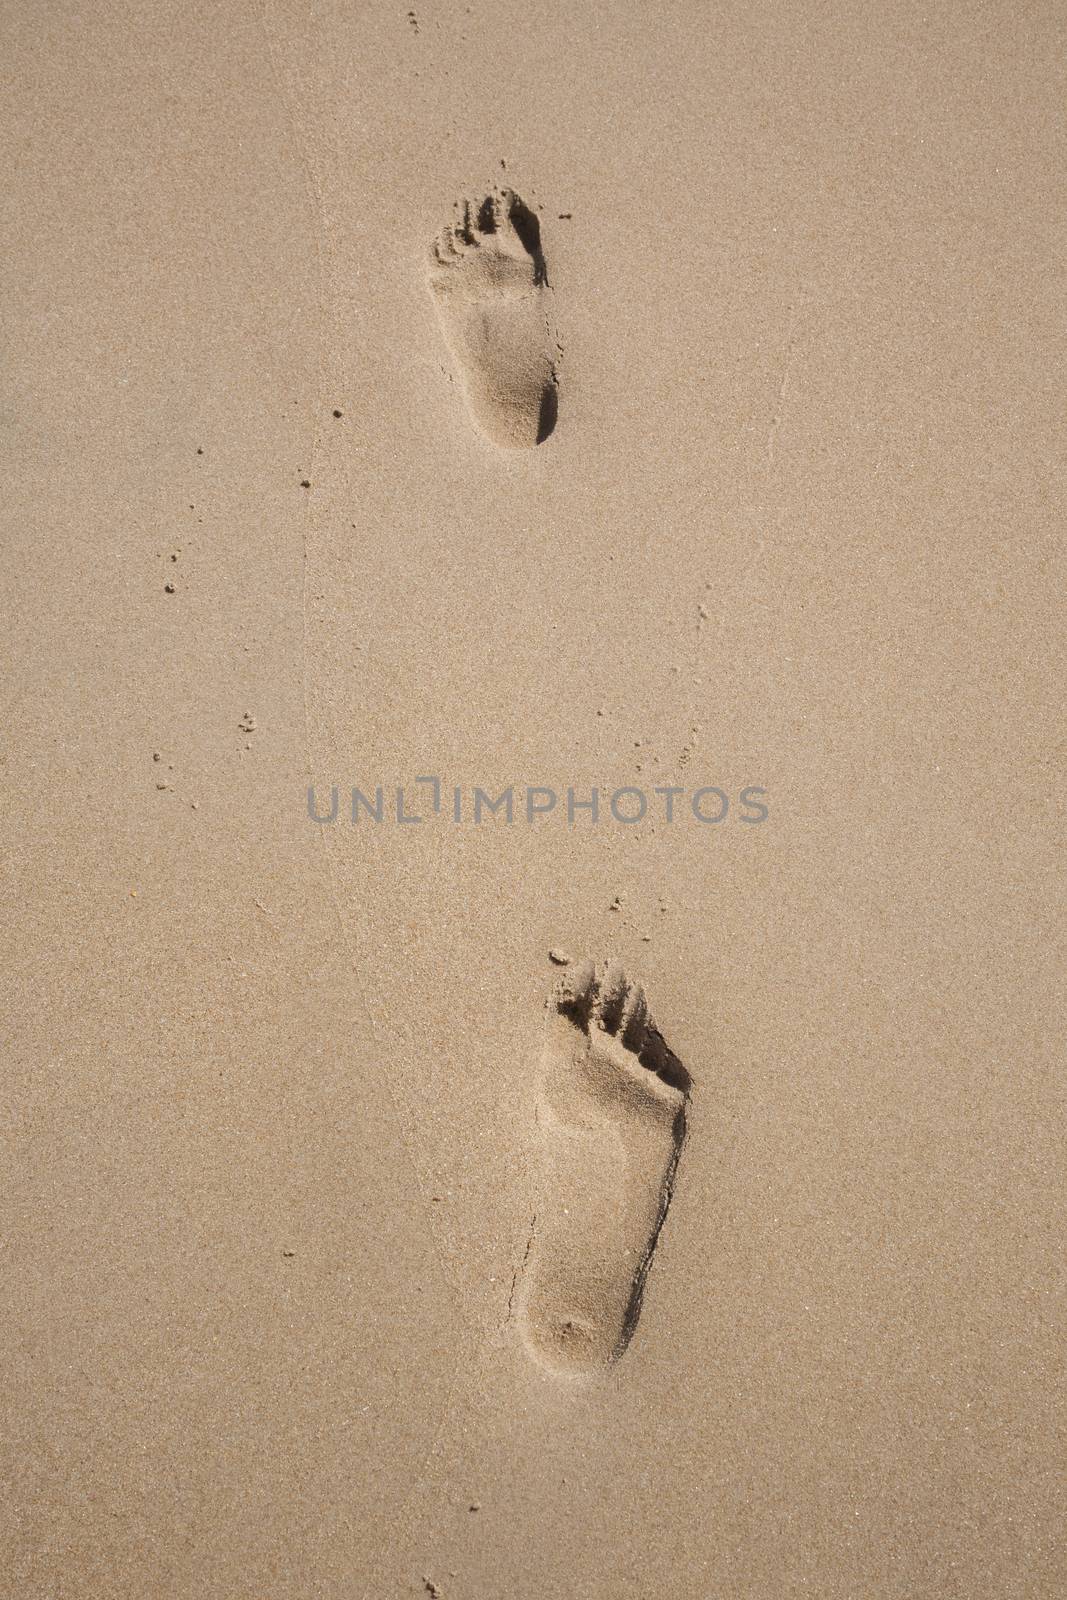 footprints both feet on a sand beach seaside next to Conil Cadiz Andalusia Spain